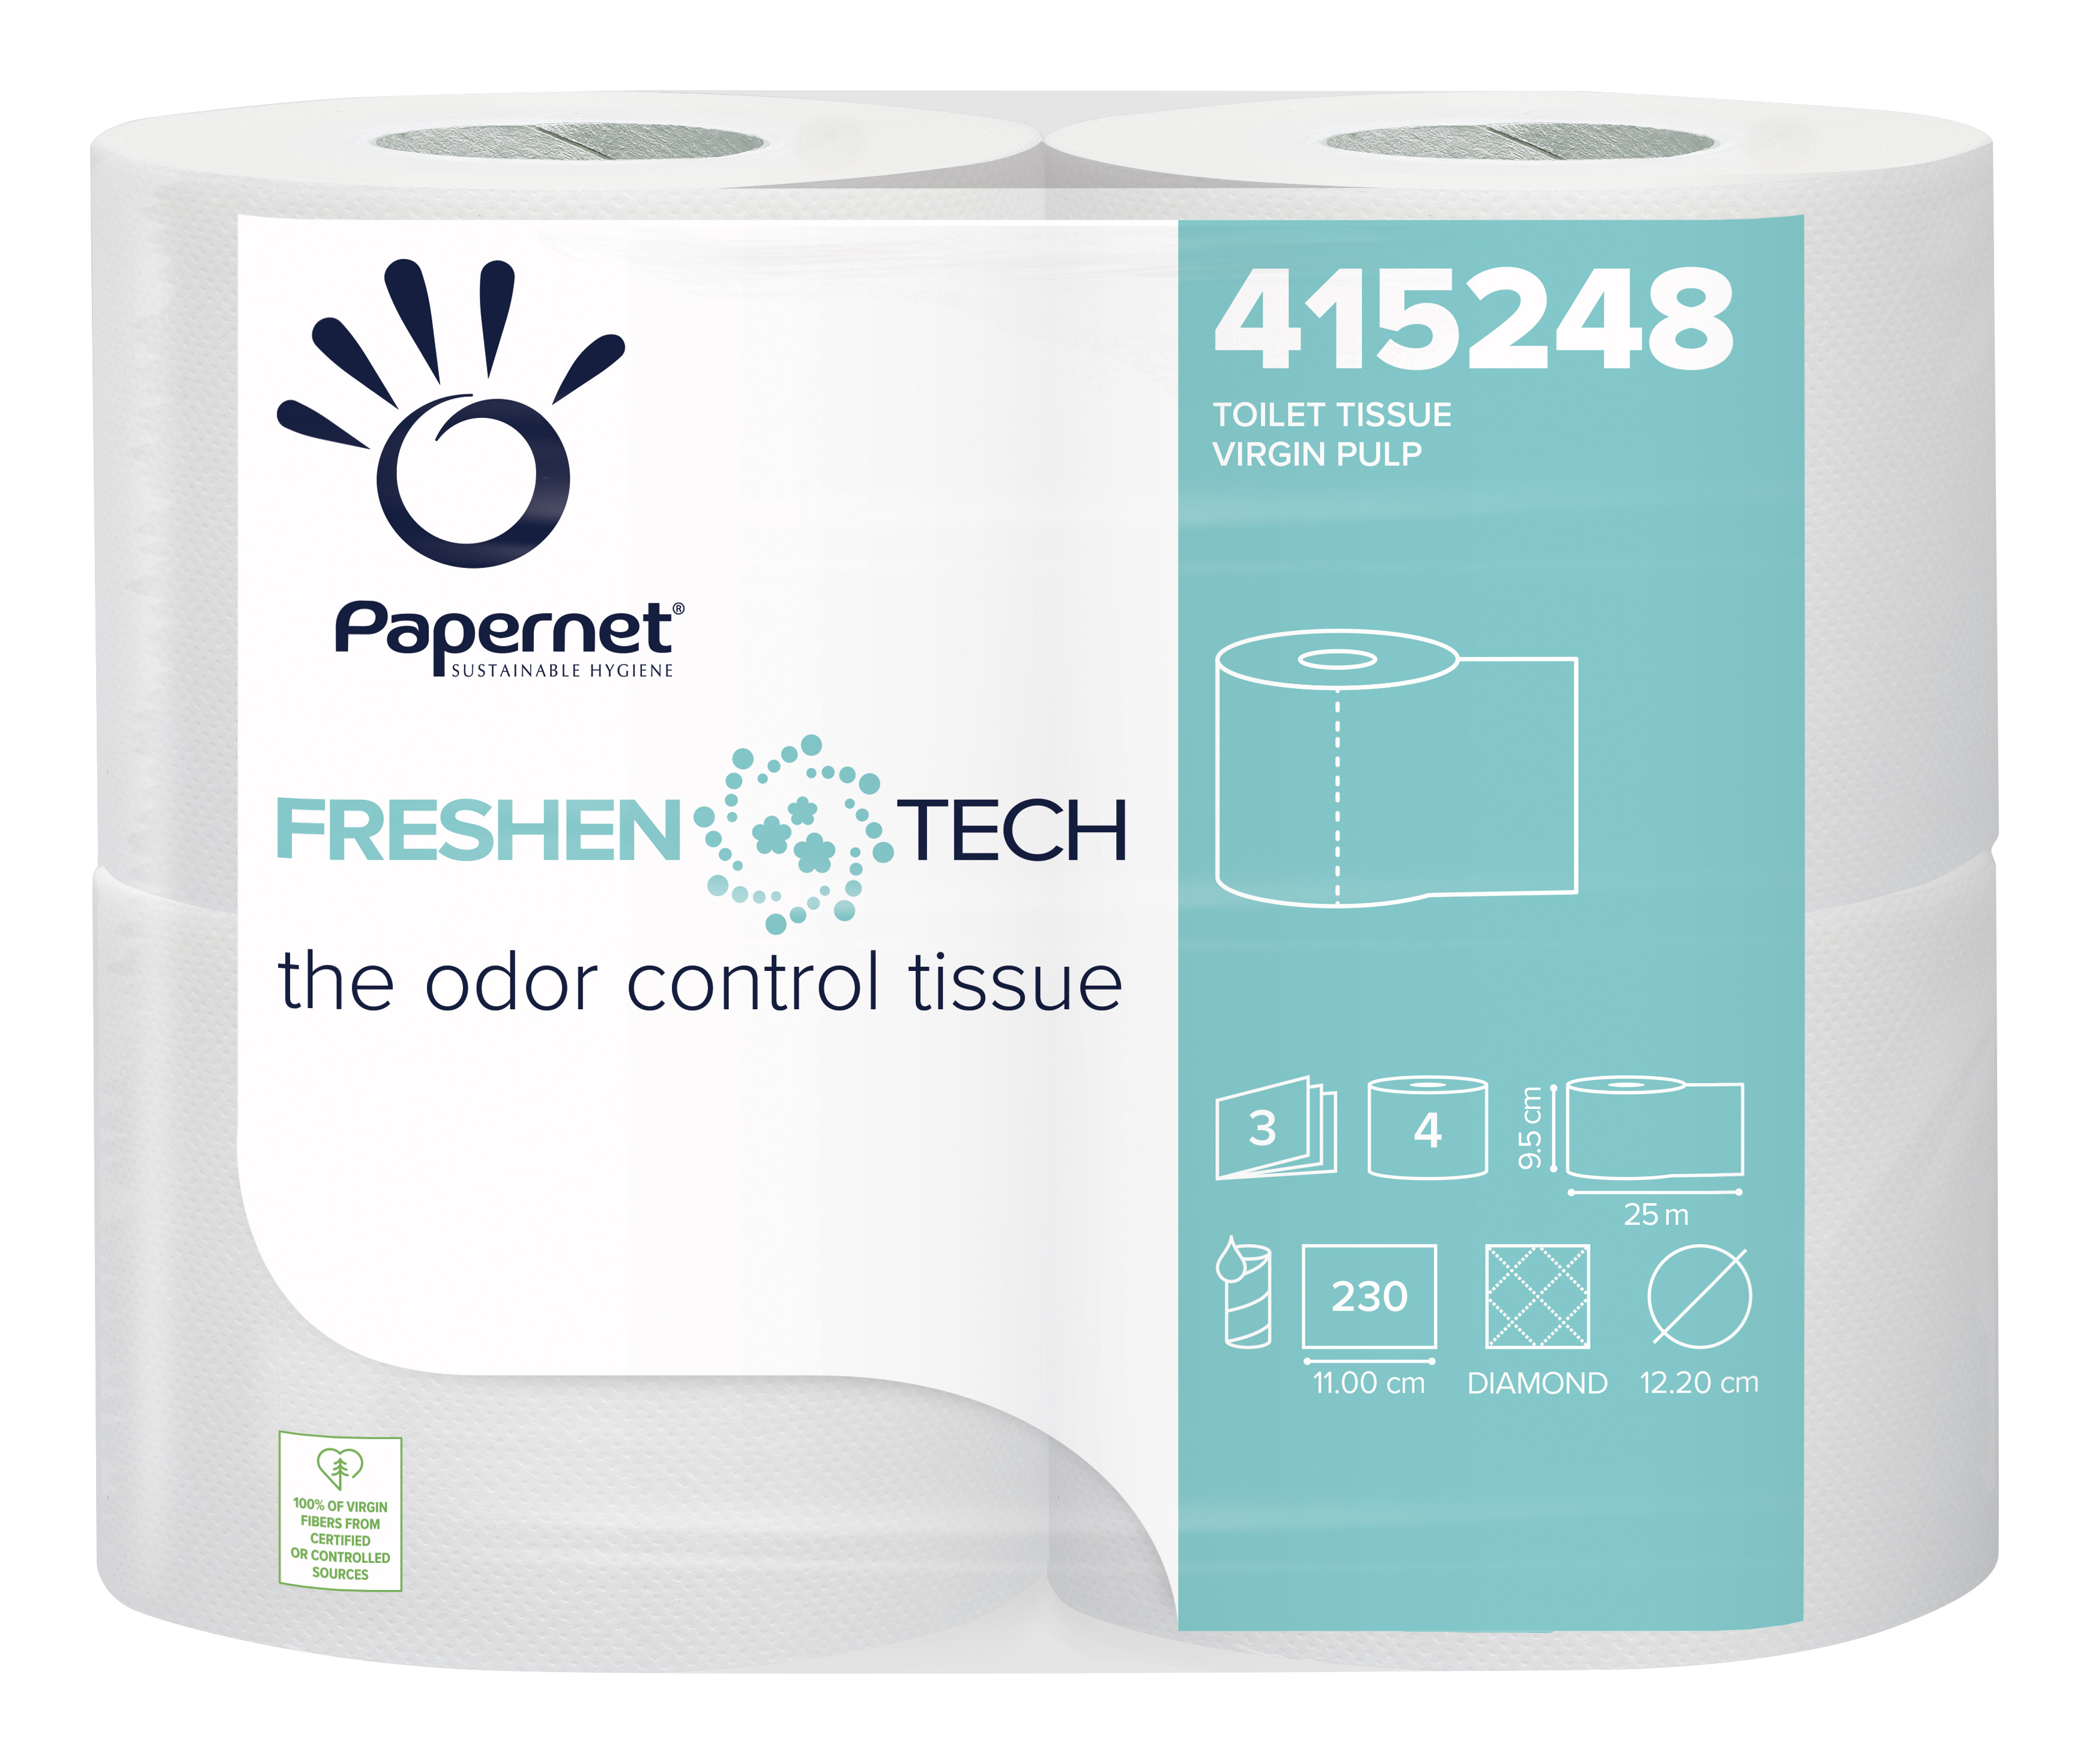 Hartie igienica superioara Freshen Tech in 3 straturi 470gr Papernet 4 role/pachet Papernet